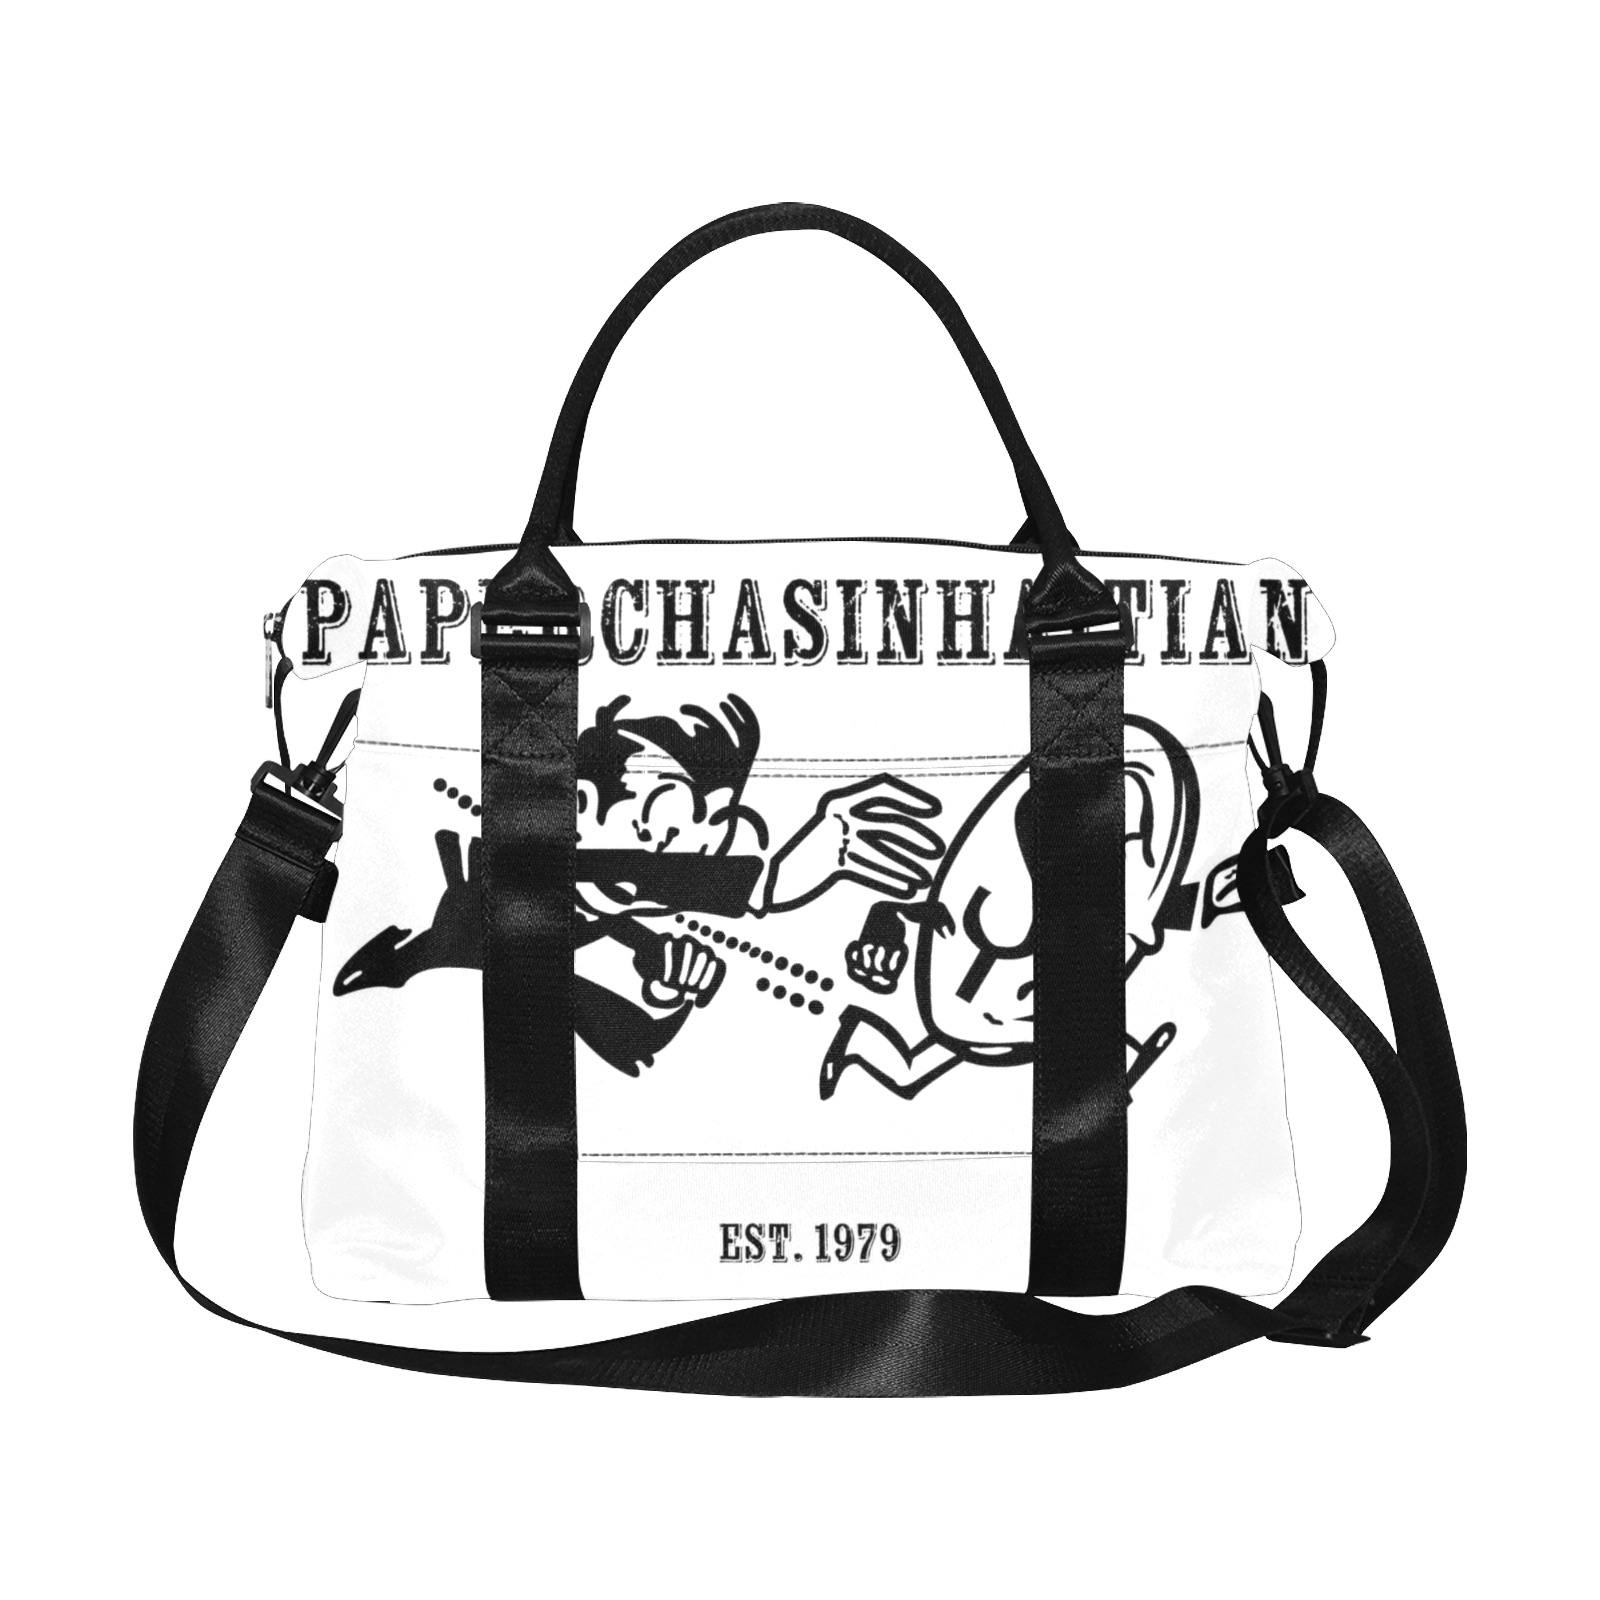 PaperChasinHAITIAN Large Capacity Duffle Bag (Model 1715)